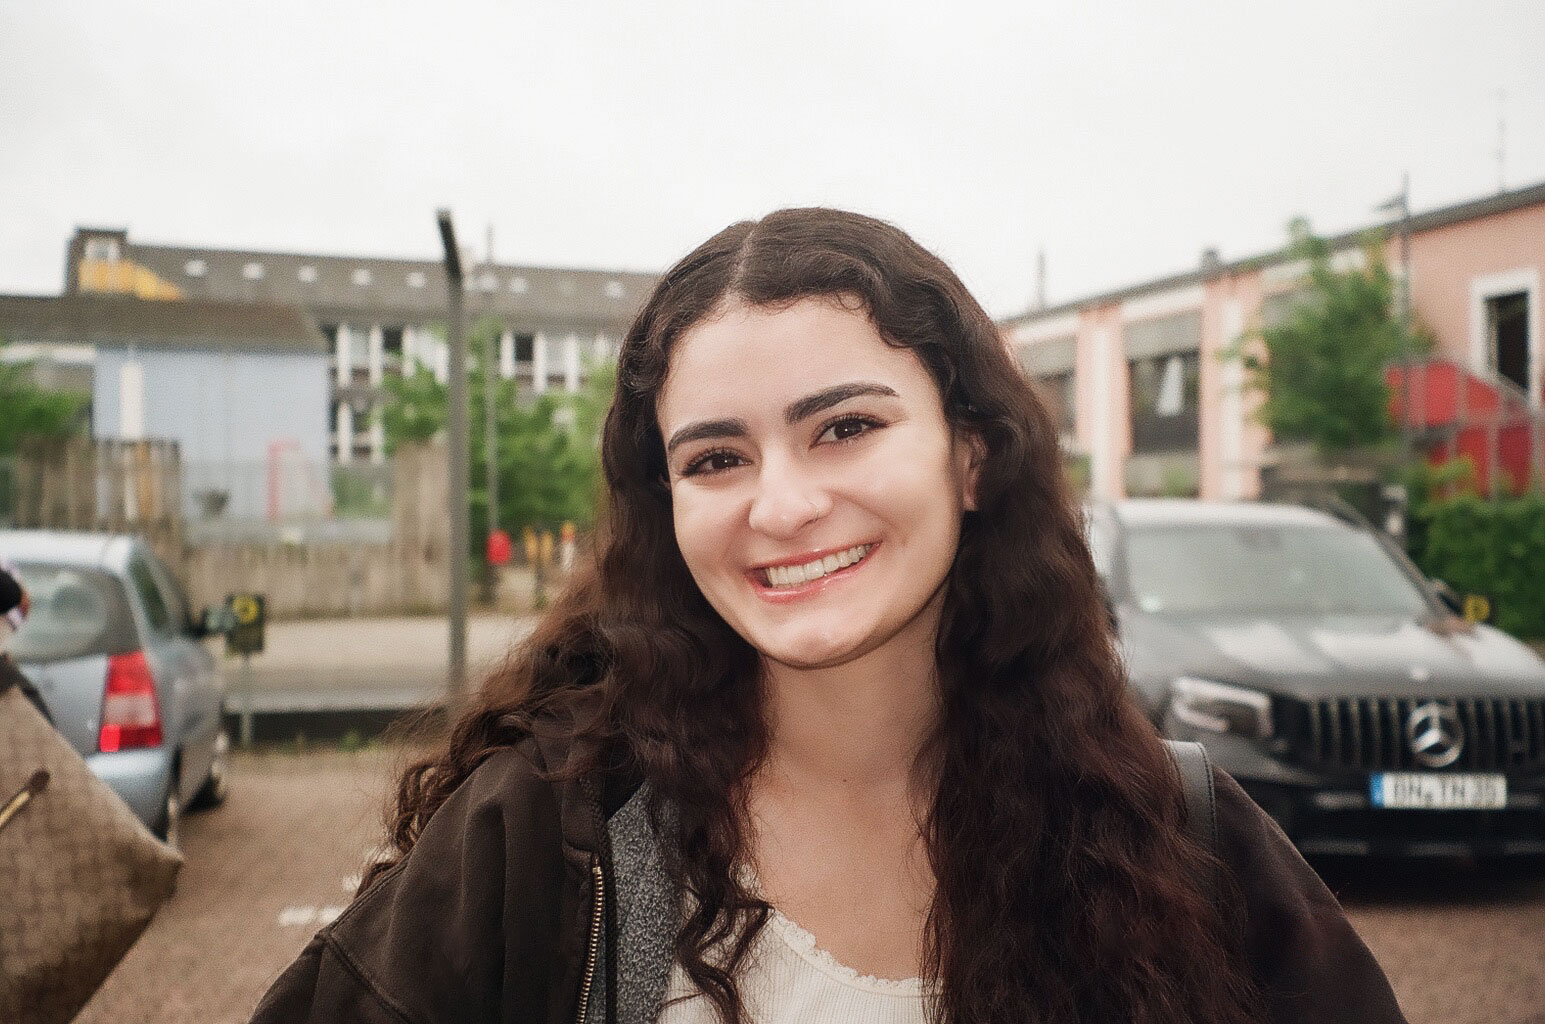 LMU student Leilani Medina is seen on a study abroad trip in Bonn, Germany.